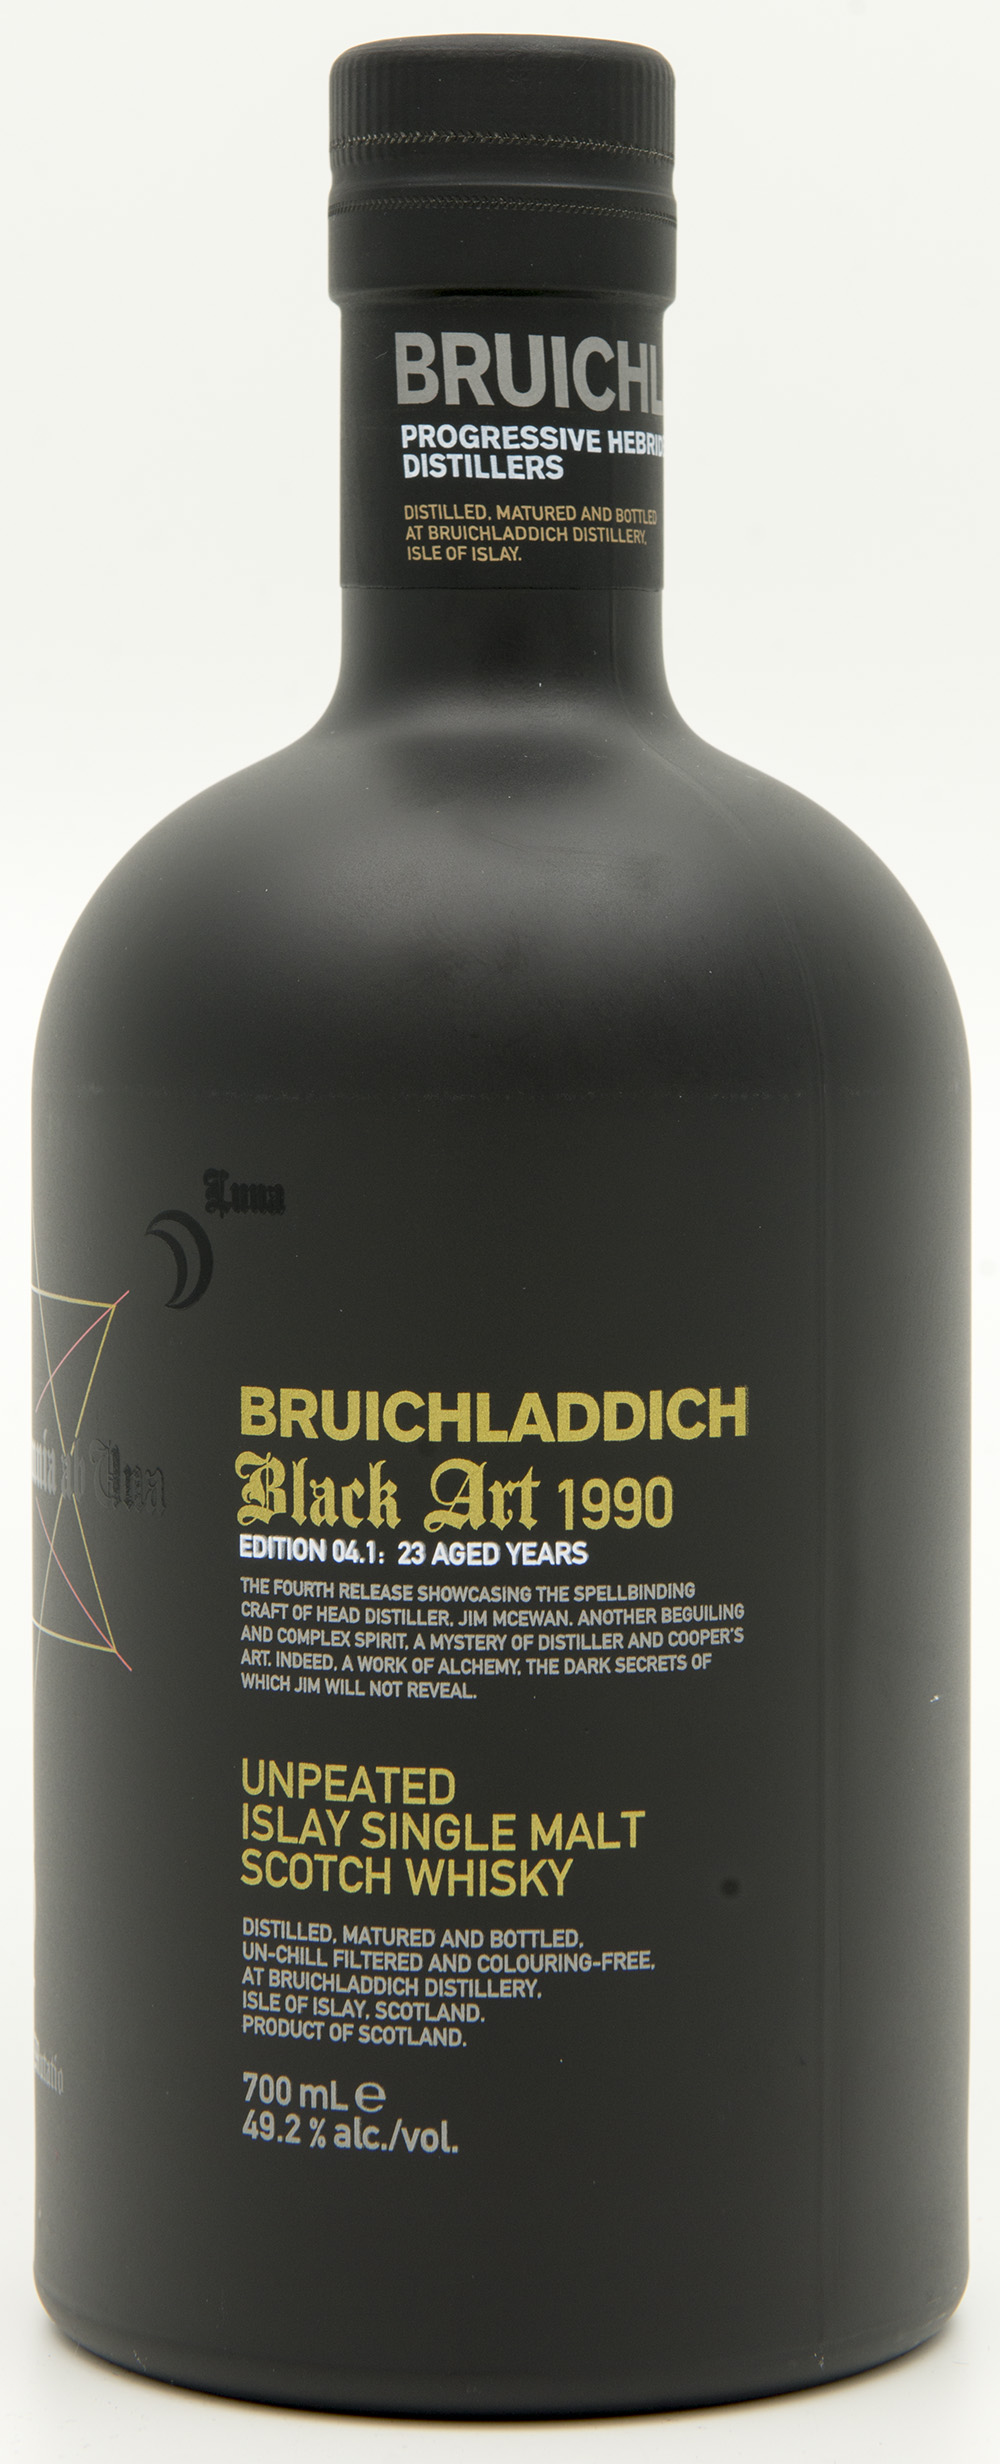 Billede: DSC_6183 - Bruichladdich Black Art 1990 - Edition 04.1 - 23 years - bottle front.jpg